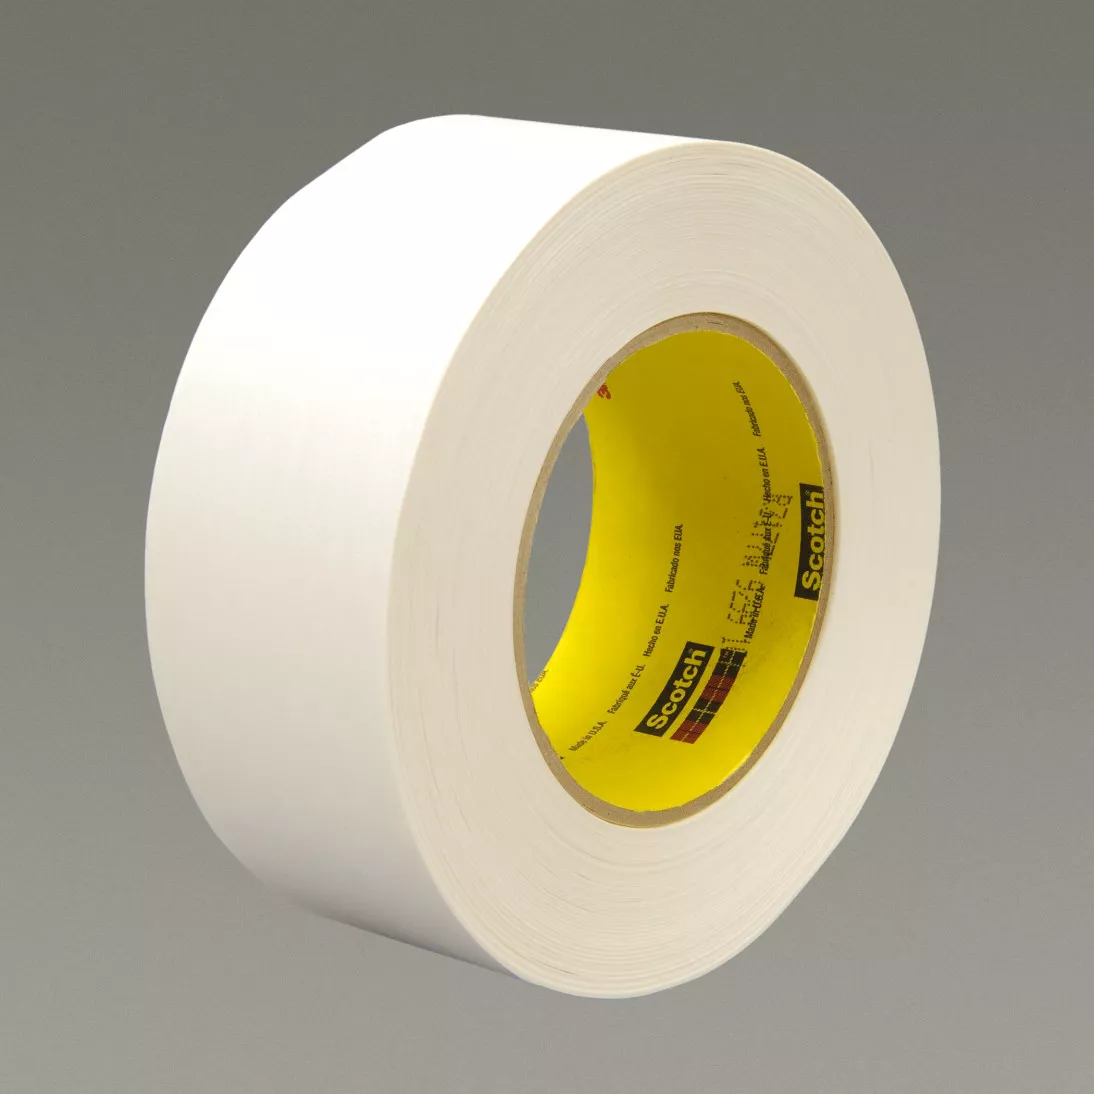 3M™ Repulpable Super Strength Single Coated Tape R3177, White, 48 mm x
165 m, 7 mil, 6 rolls per case